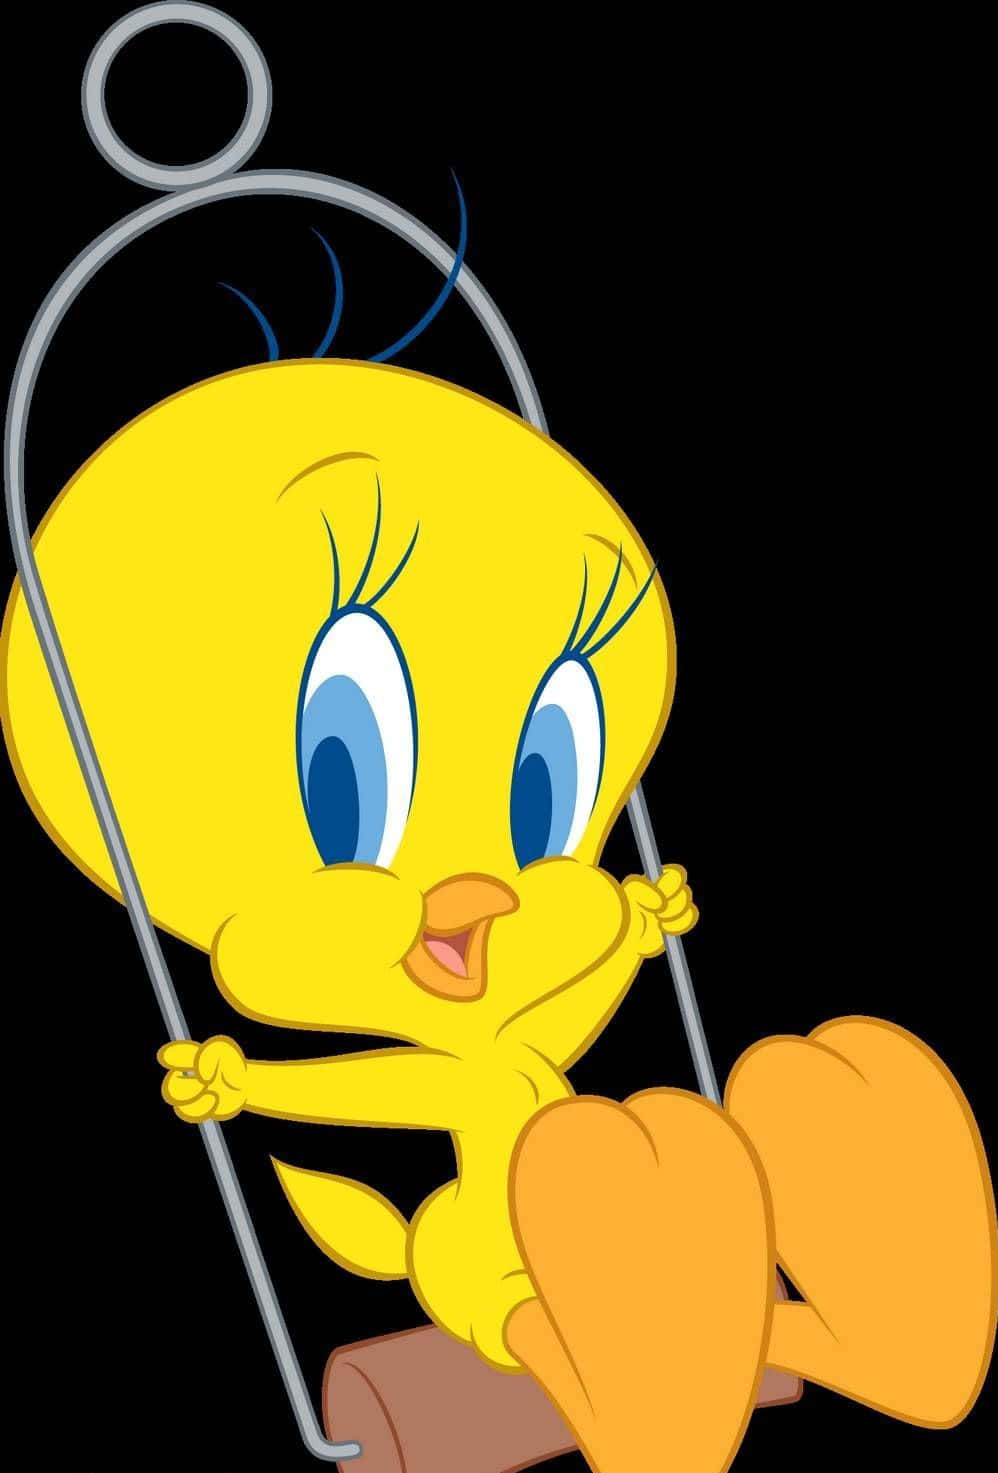 Download Tweety Bird the Mischievous Animated Star